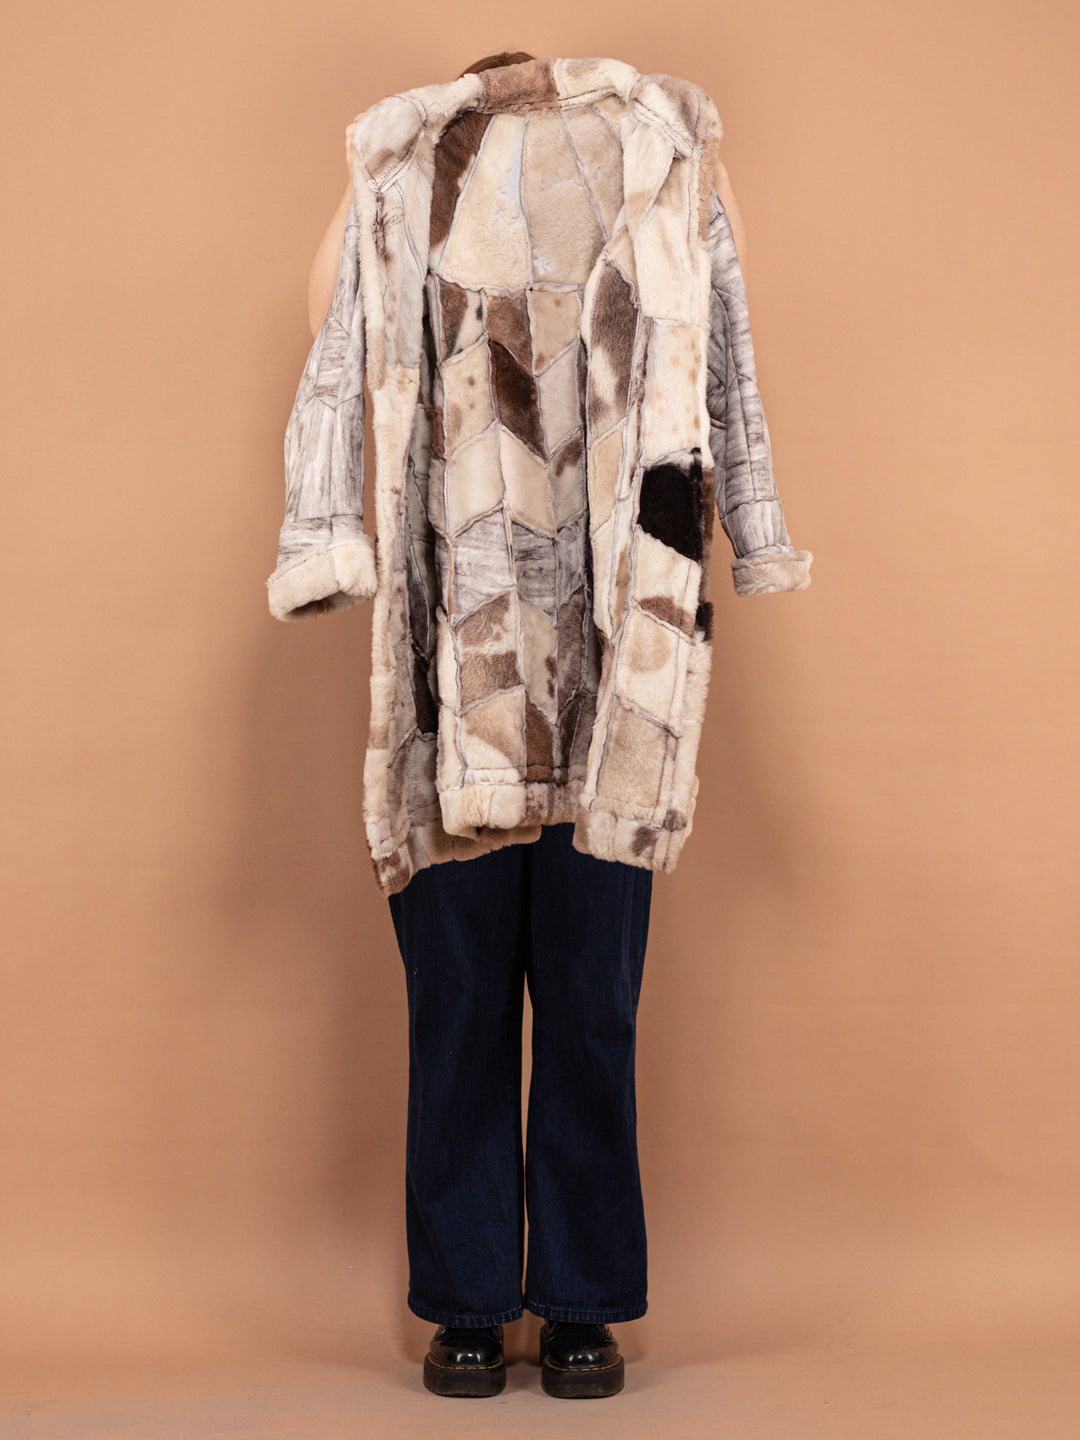 80's Patchwork Sheepskin Coat, Size S, Patchwork Leather Coat, Retro Winter Coat, Vintage Sheepskin Coat, 80s Outerwear, Beige Fur Coat